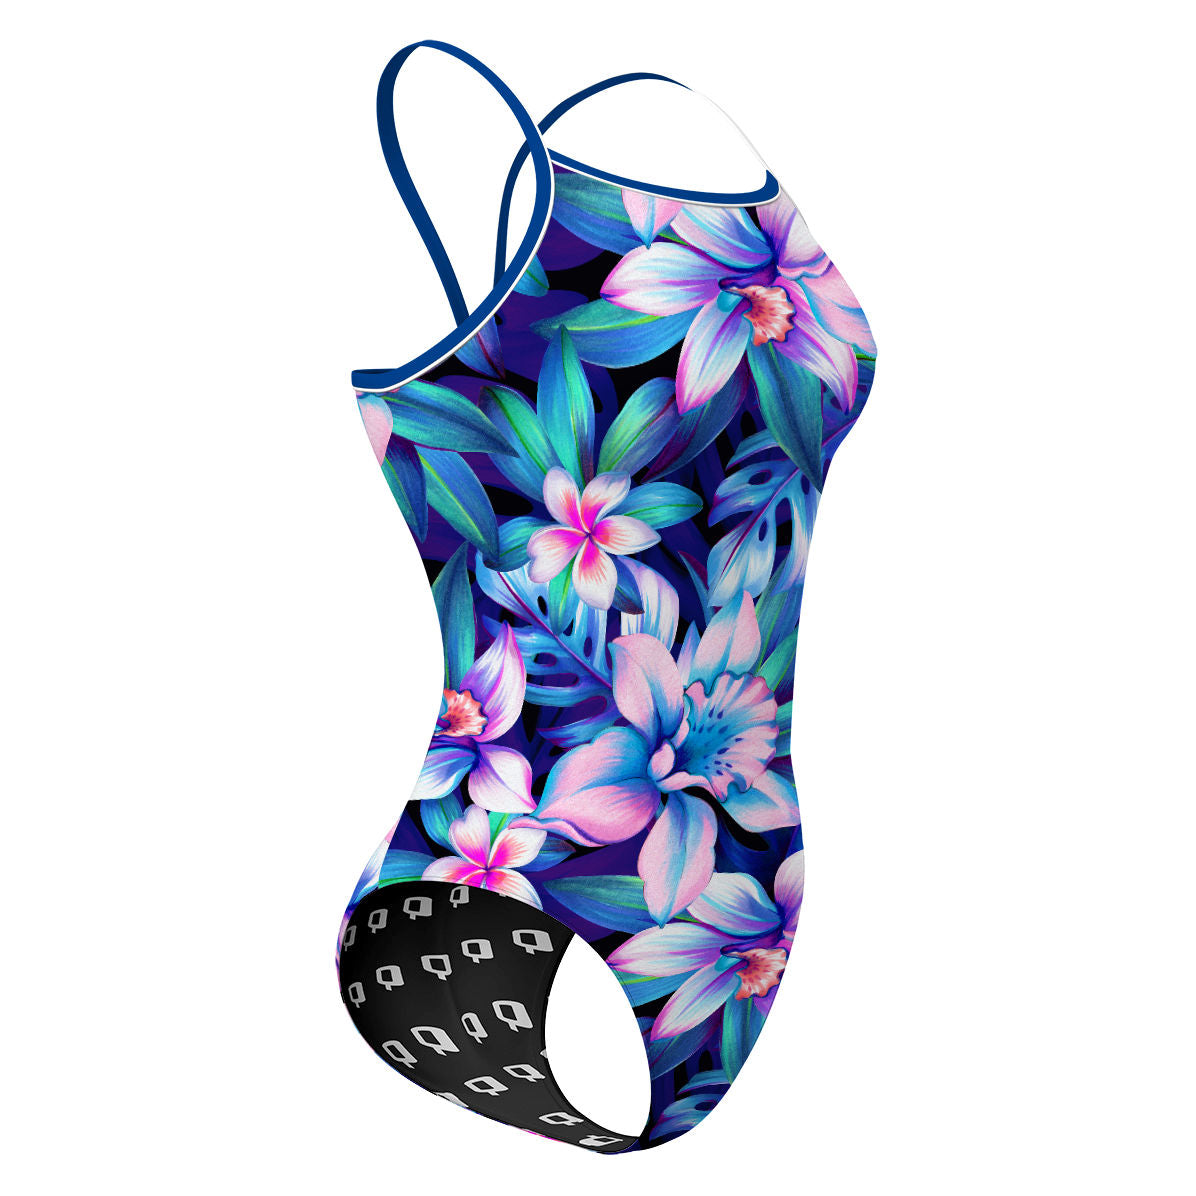 Outstanding Orchids - Sunback Tank Swimsuit